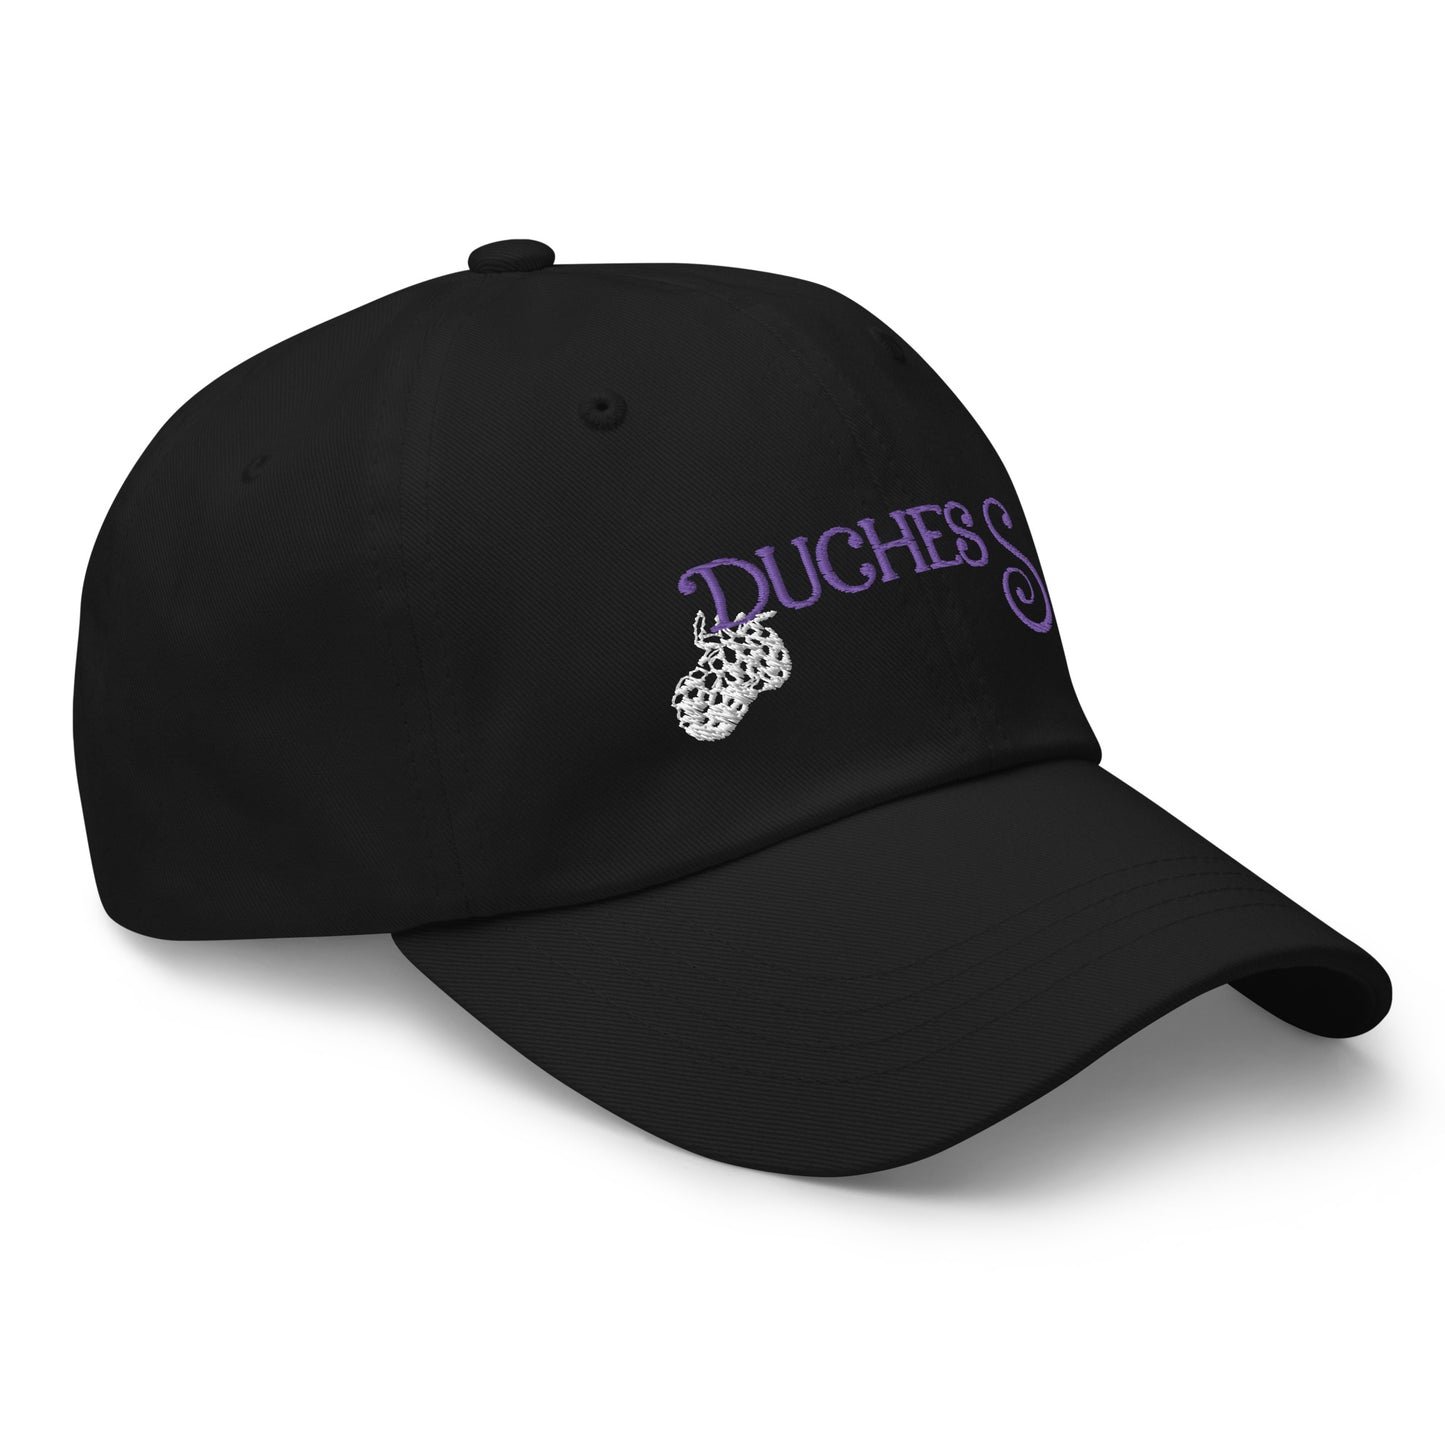 LoM- Duchess Embroidered Dad hat